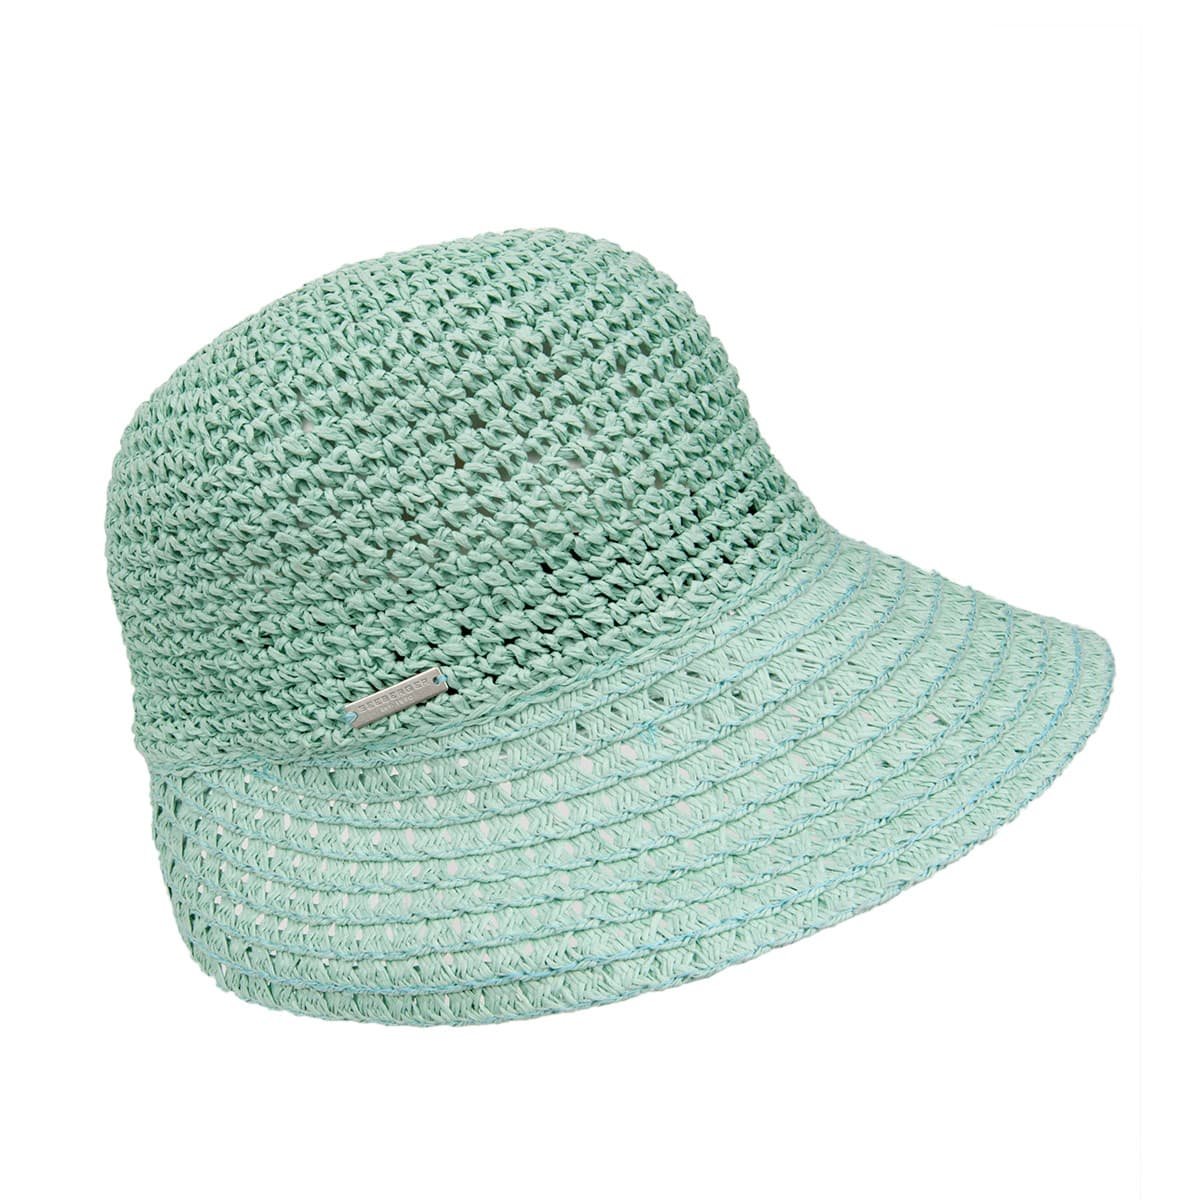 SEEBERGER Ladies Paper Straw hat Online Hatshop for hats, headbands, gloves and scarfs